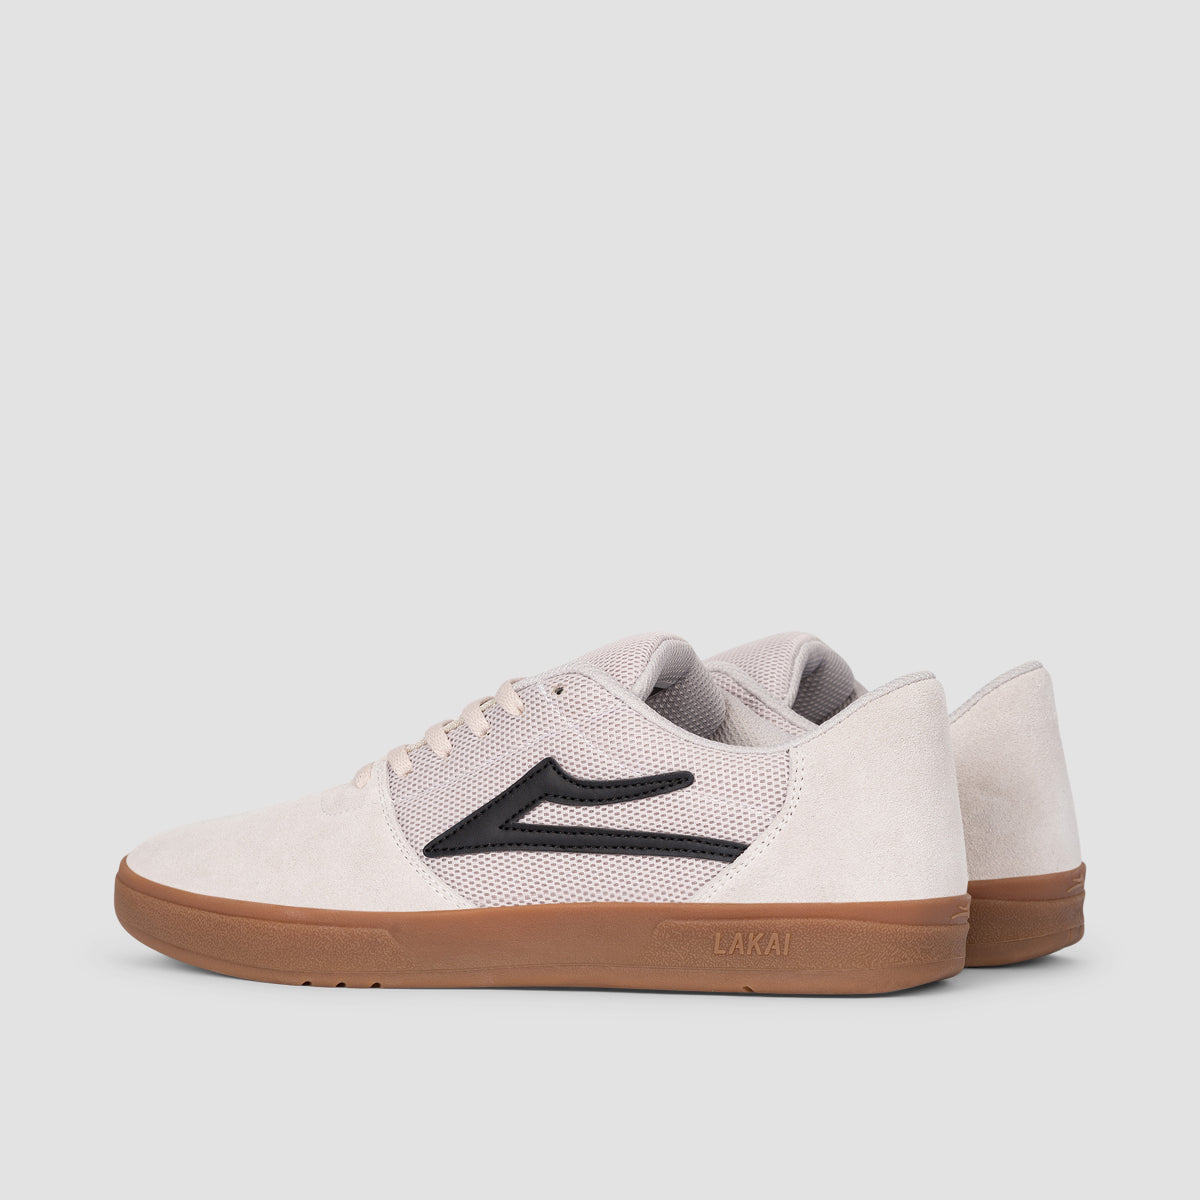 Lakai Brighton Shoes - White/Gum Suede